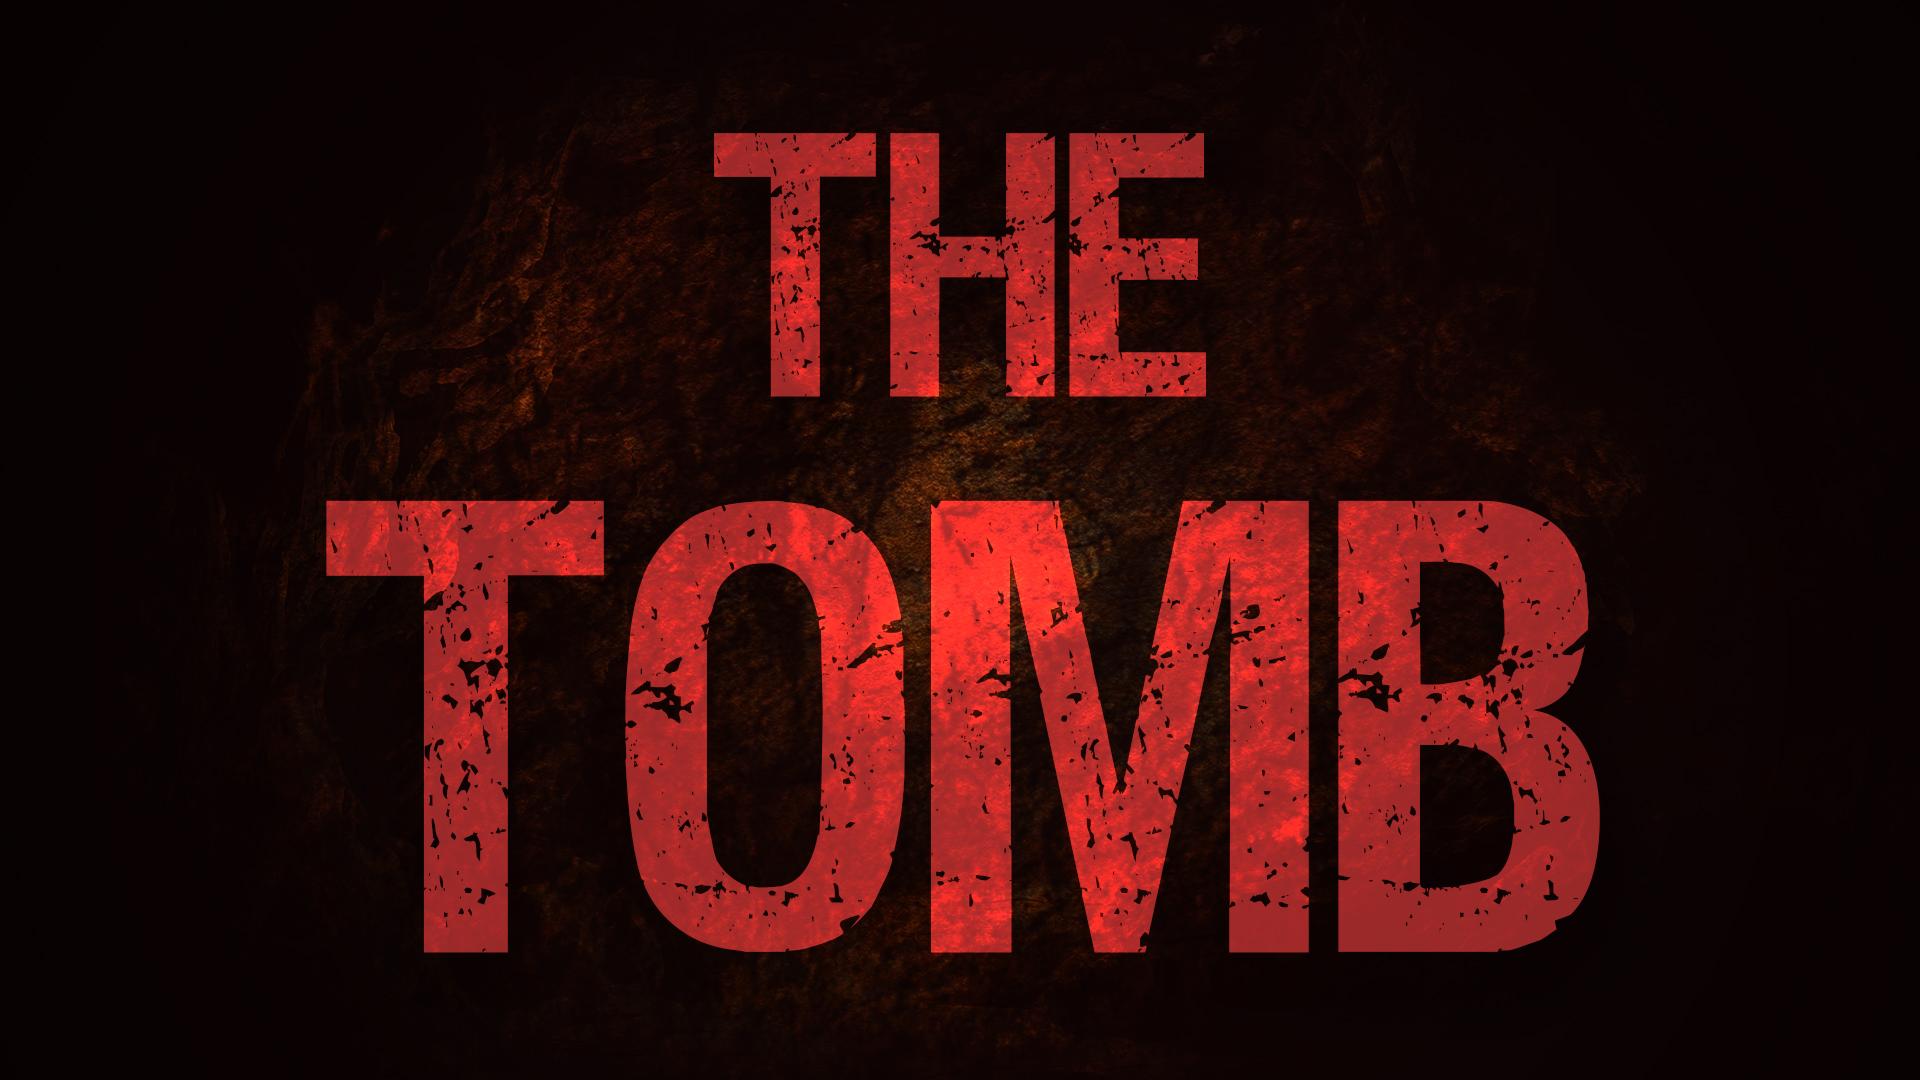 The Tomb